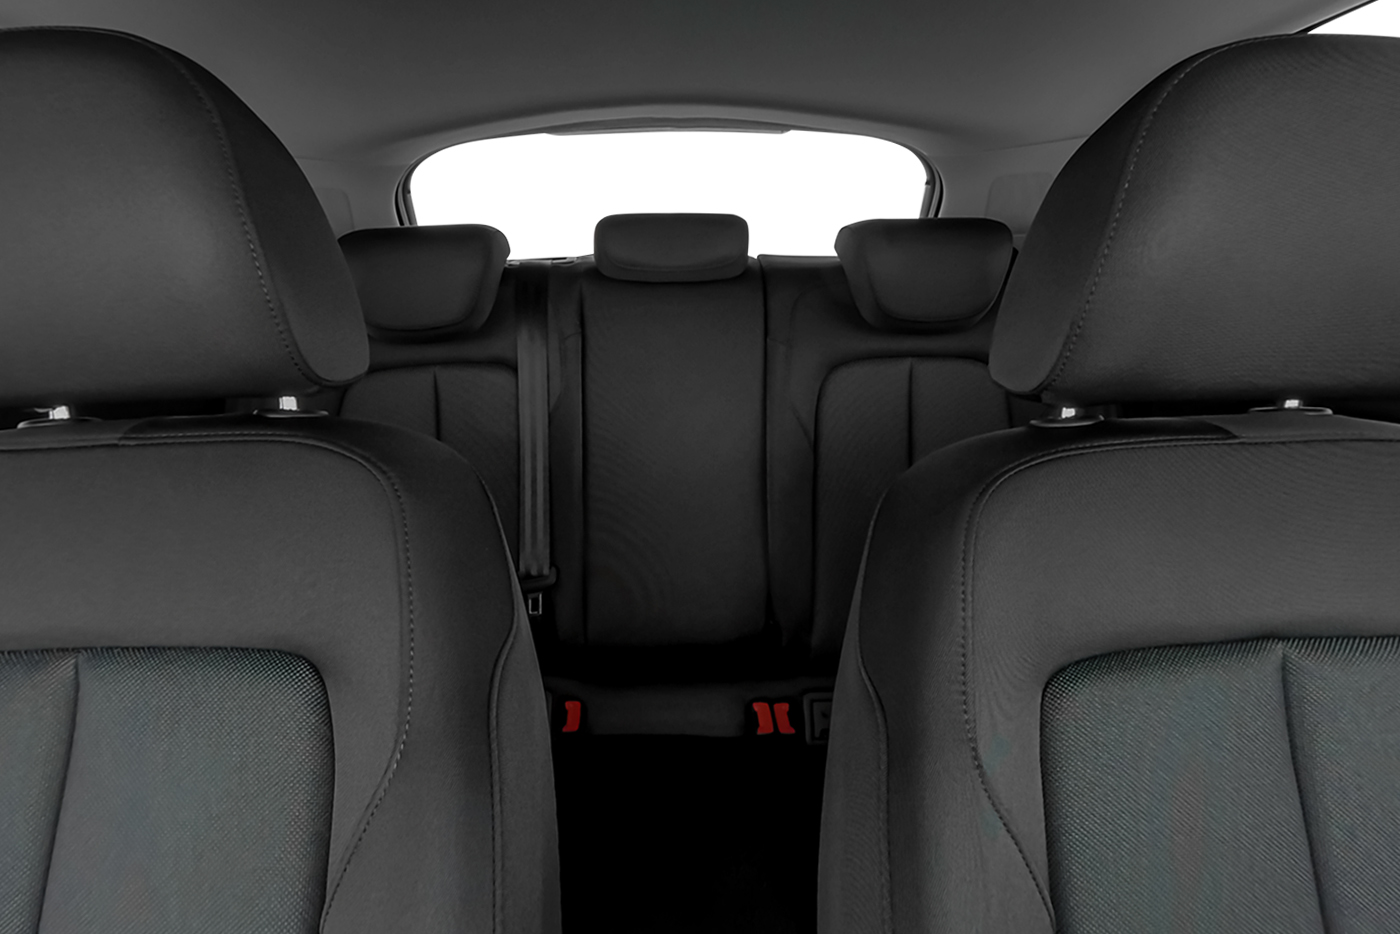 Audi Q2 - Flexible Car Subscription with MILES